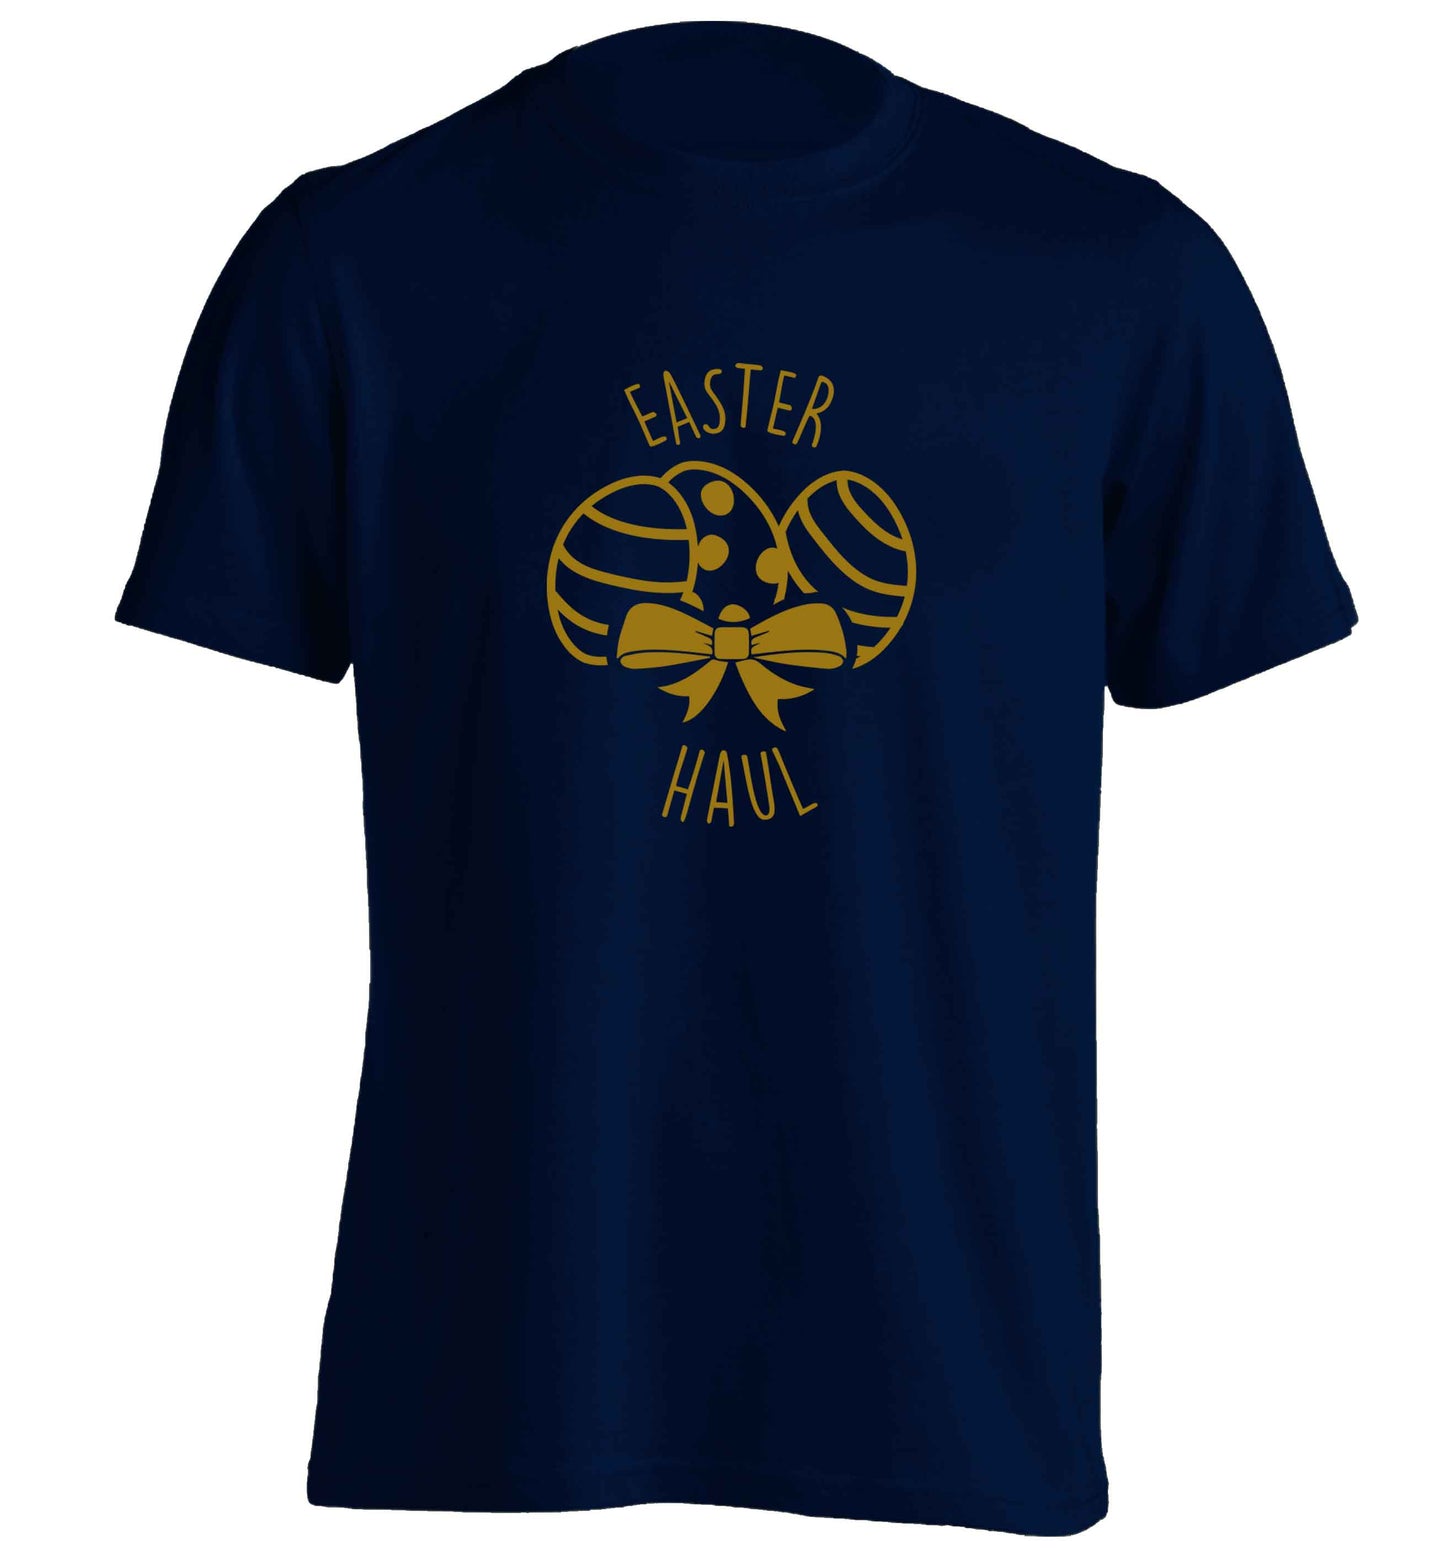 Easter haul adults unisex navy Tshirt 2XL